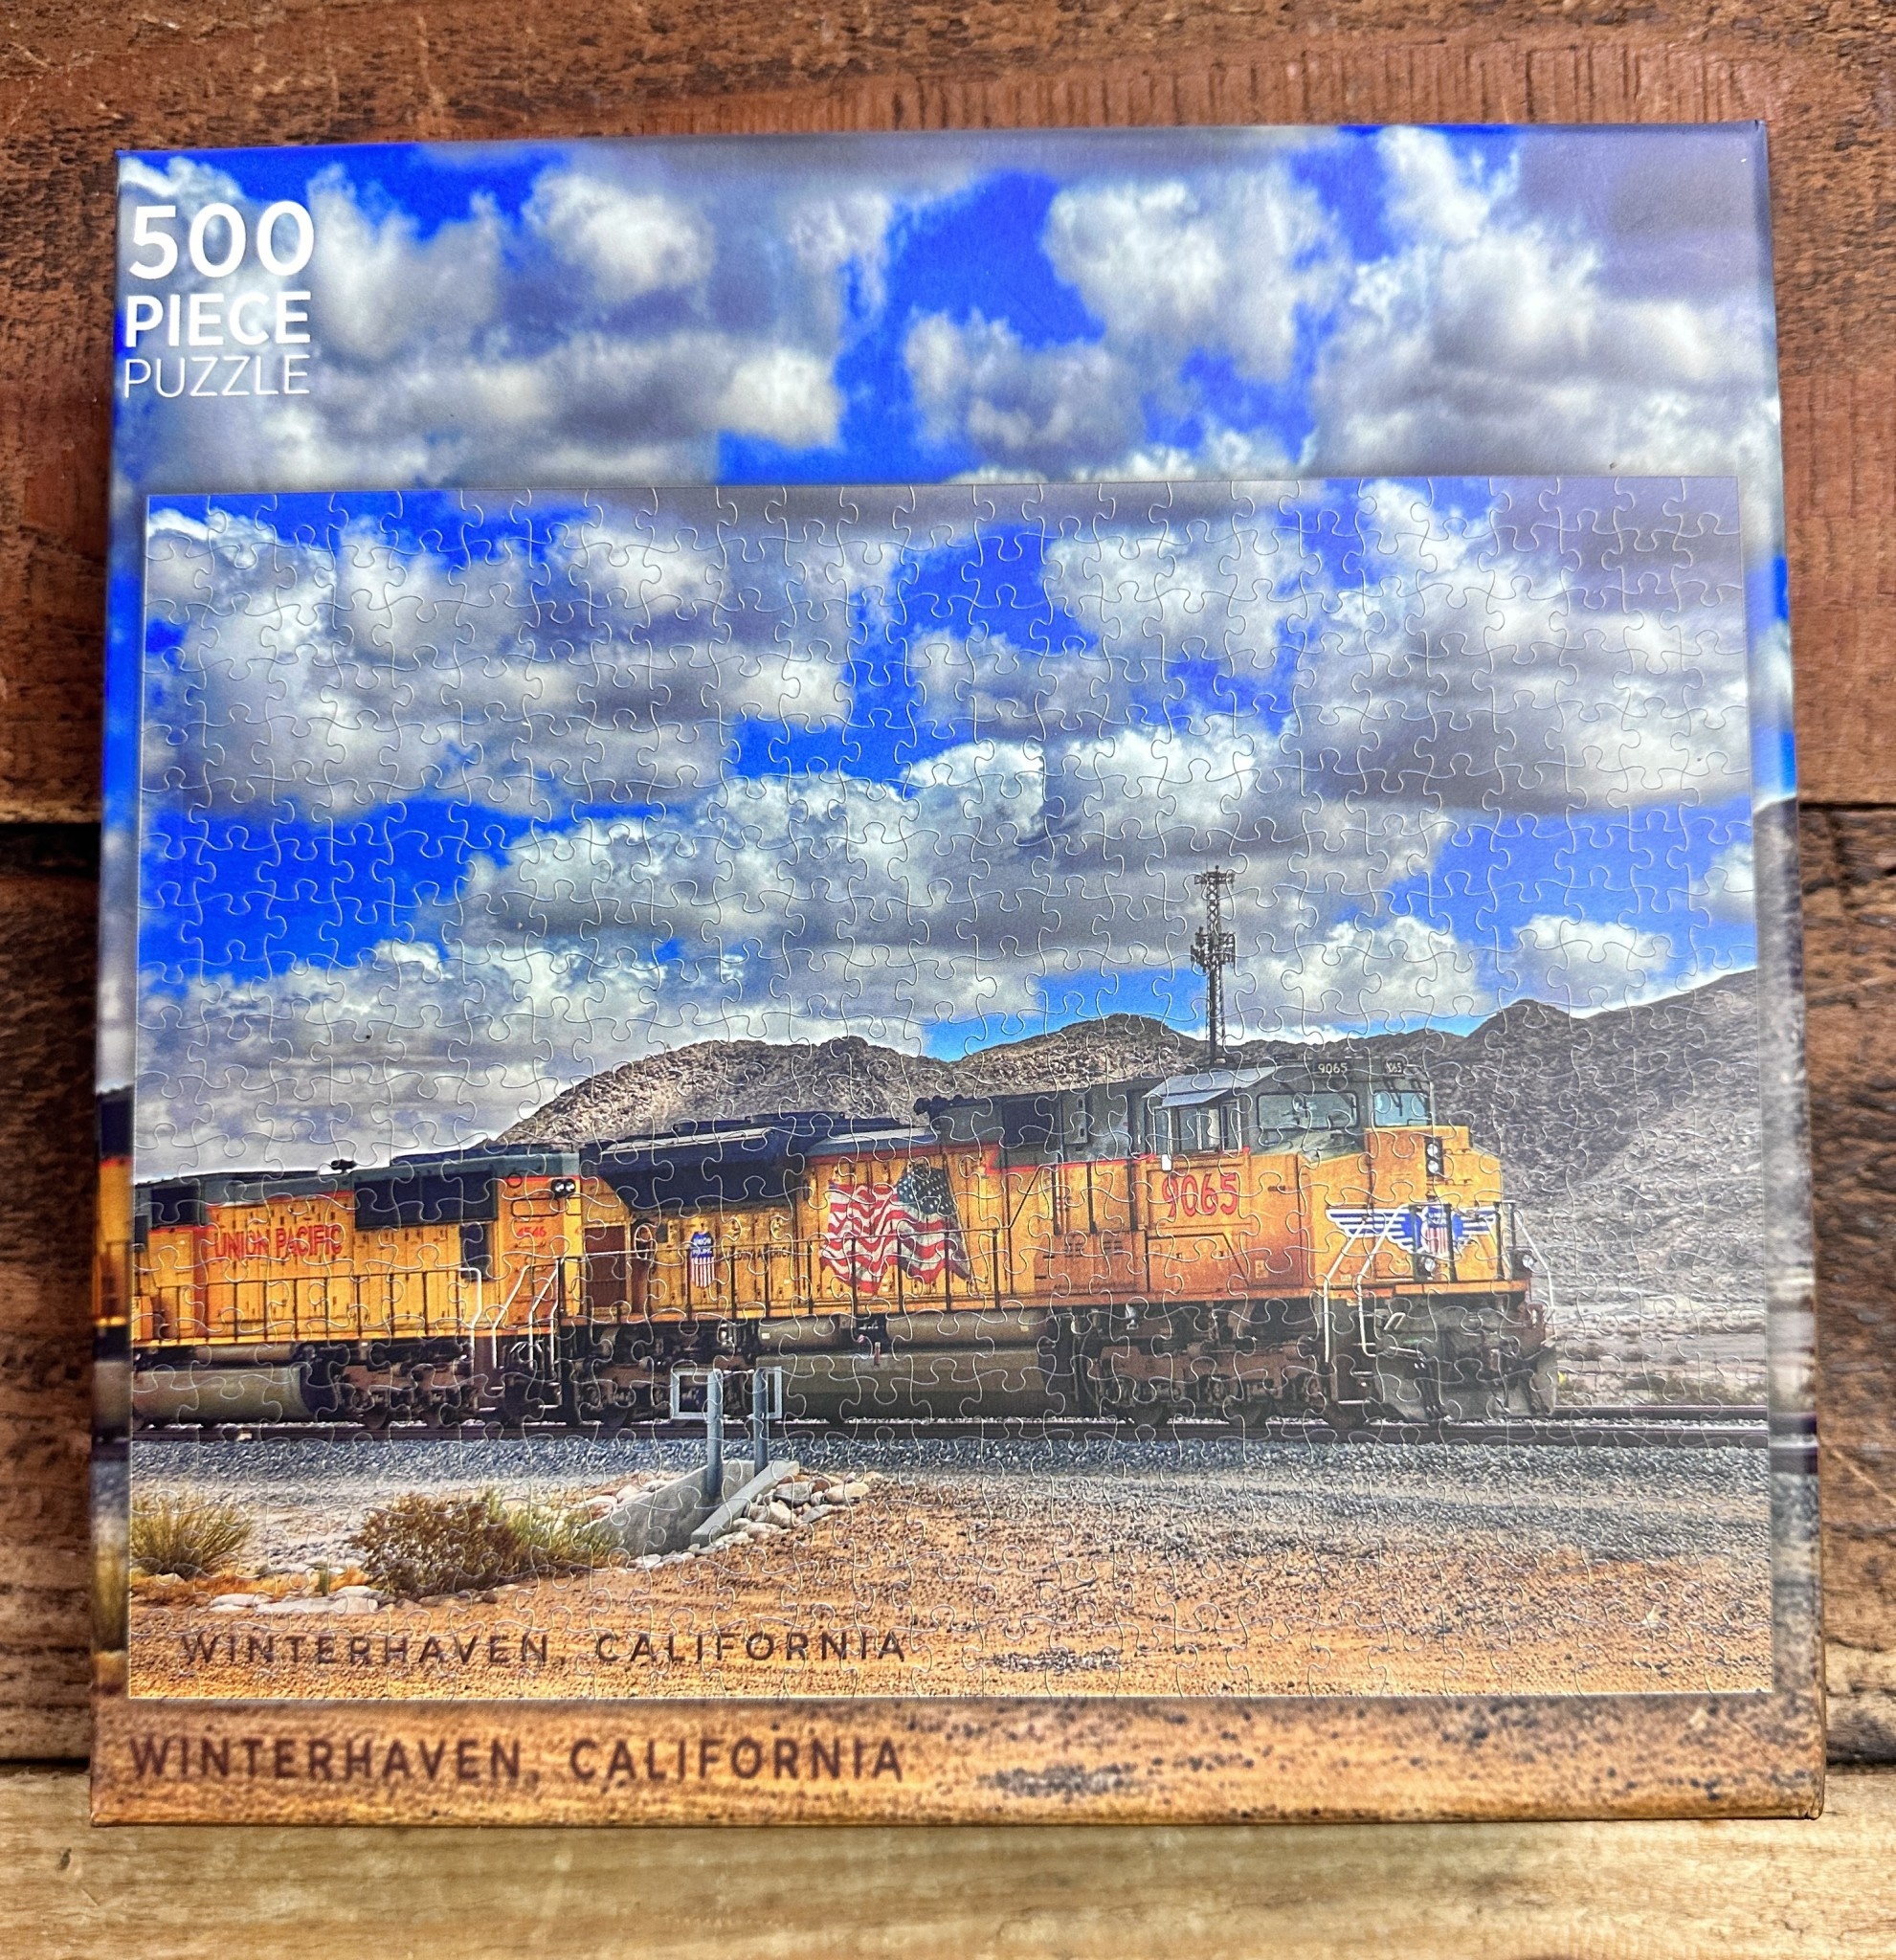 500 Piece Jigsaw Puzzle - Winterhaven, California